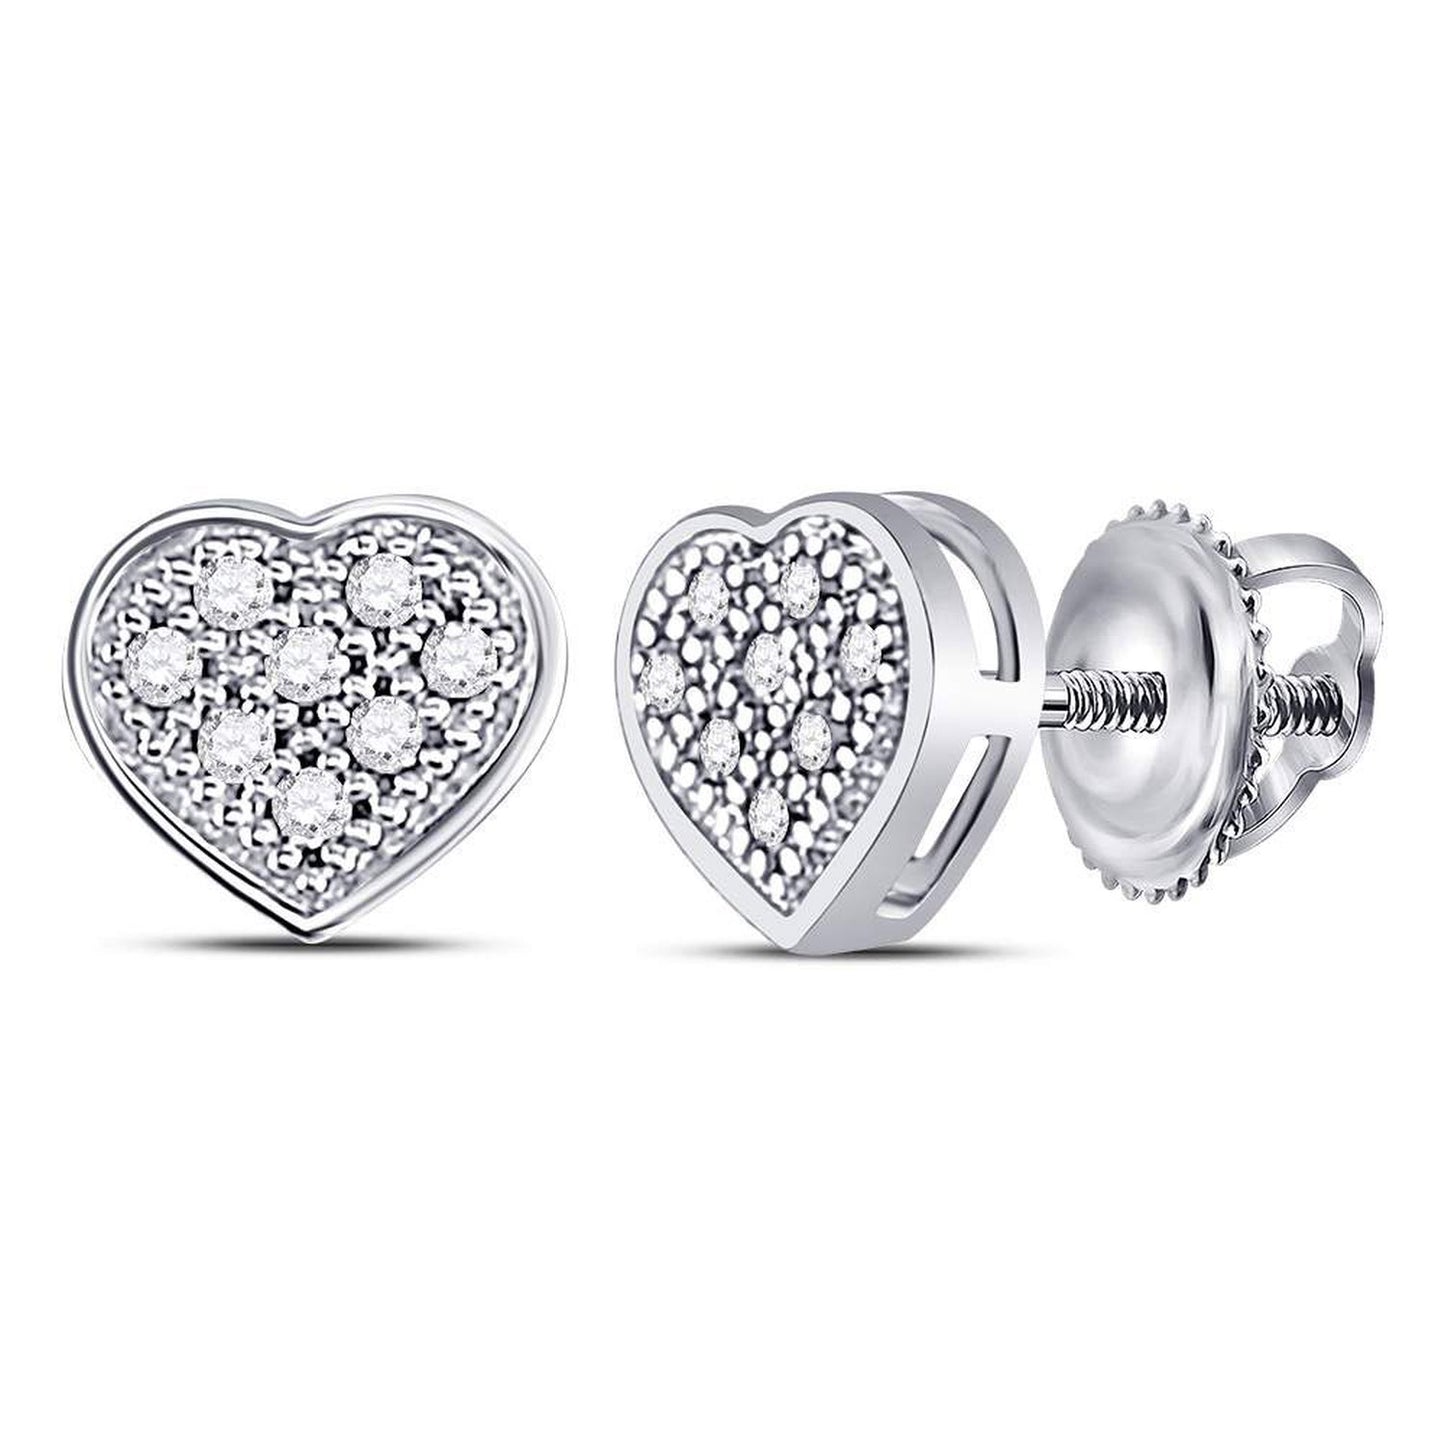 GND 10kt White Gold Womens Round Diamond Heart Cluster Earrings 1/20 Cttw